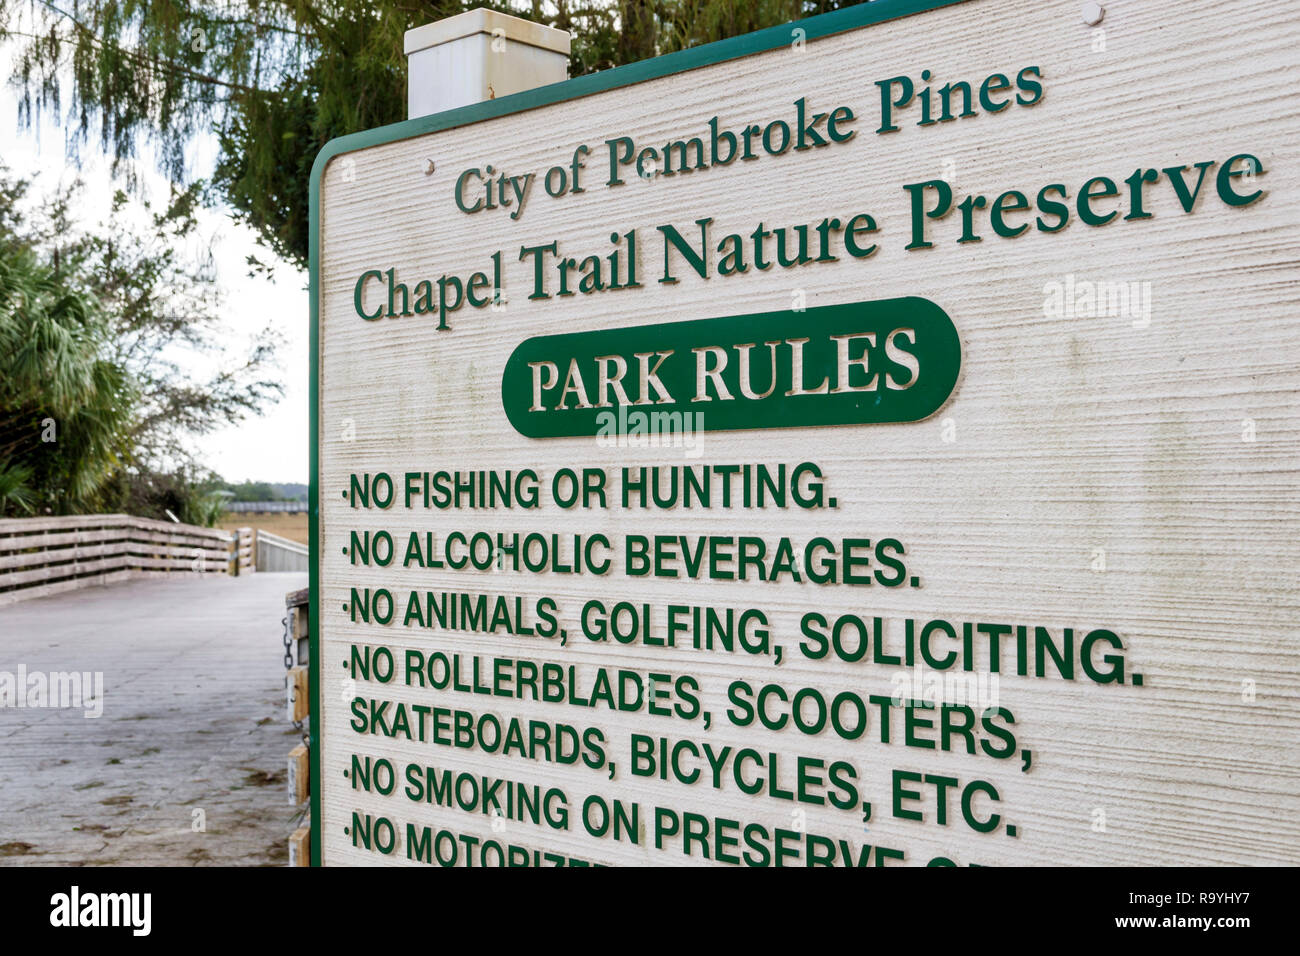 Fort Ft. Lauderdale Florida, Pembroke Pines, Chapel Trail Nature Preserve, Schild mit Parkregeln, FL181222170 Stockfoto